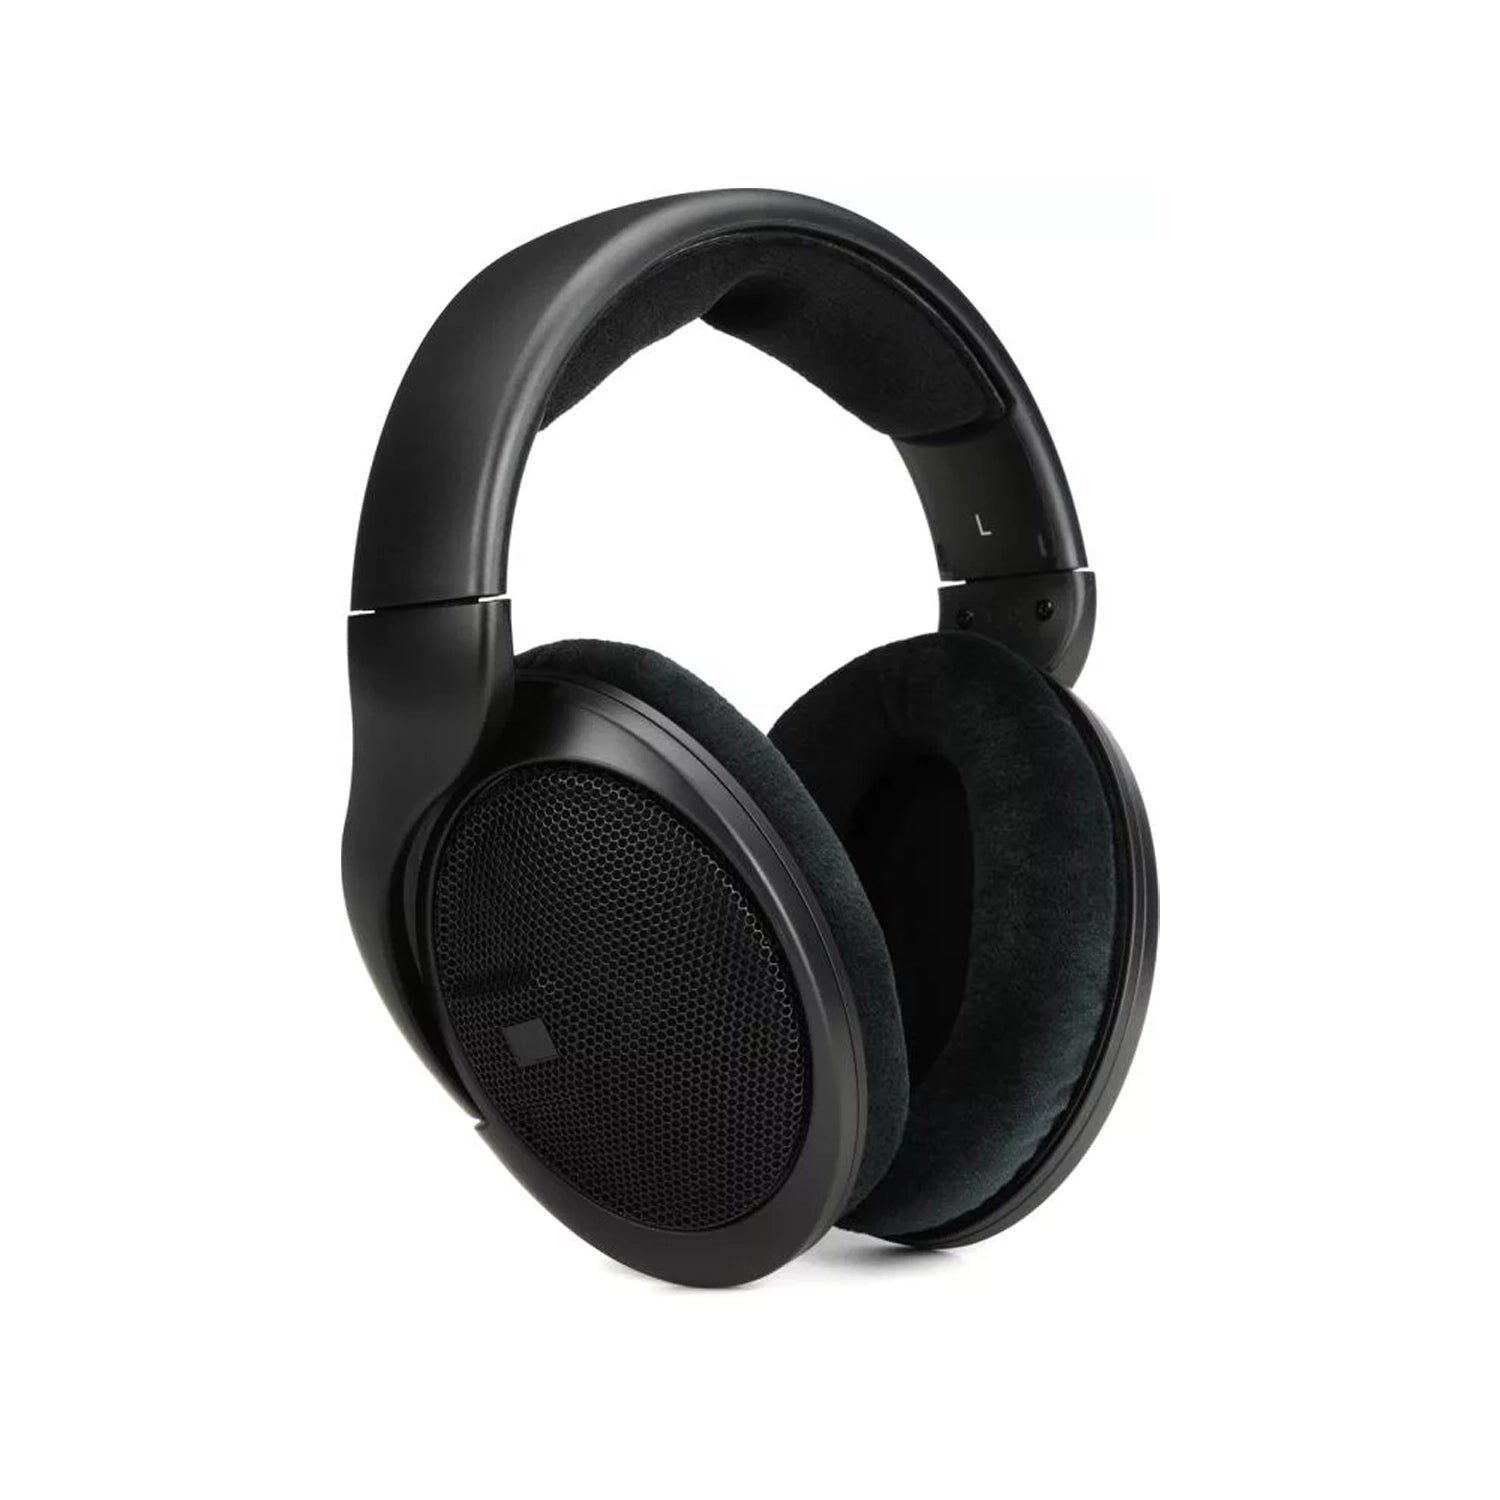 Sennheiser HD400 Pro Reference Open Back Headphones